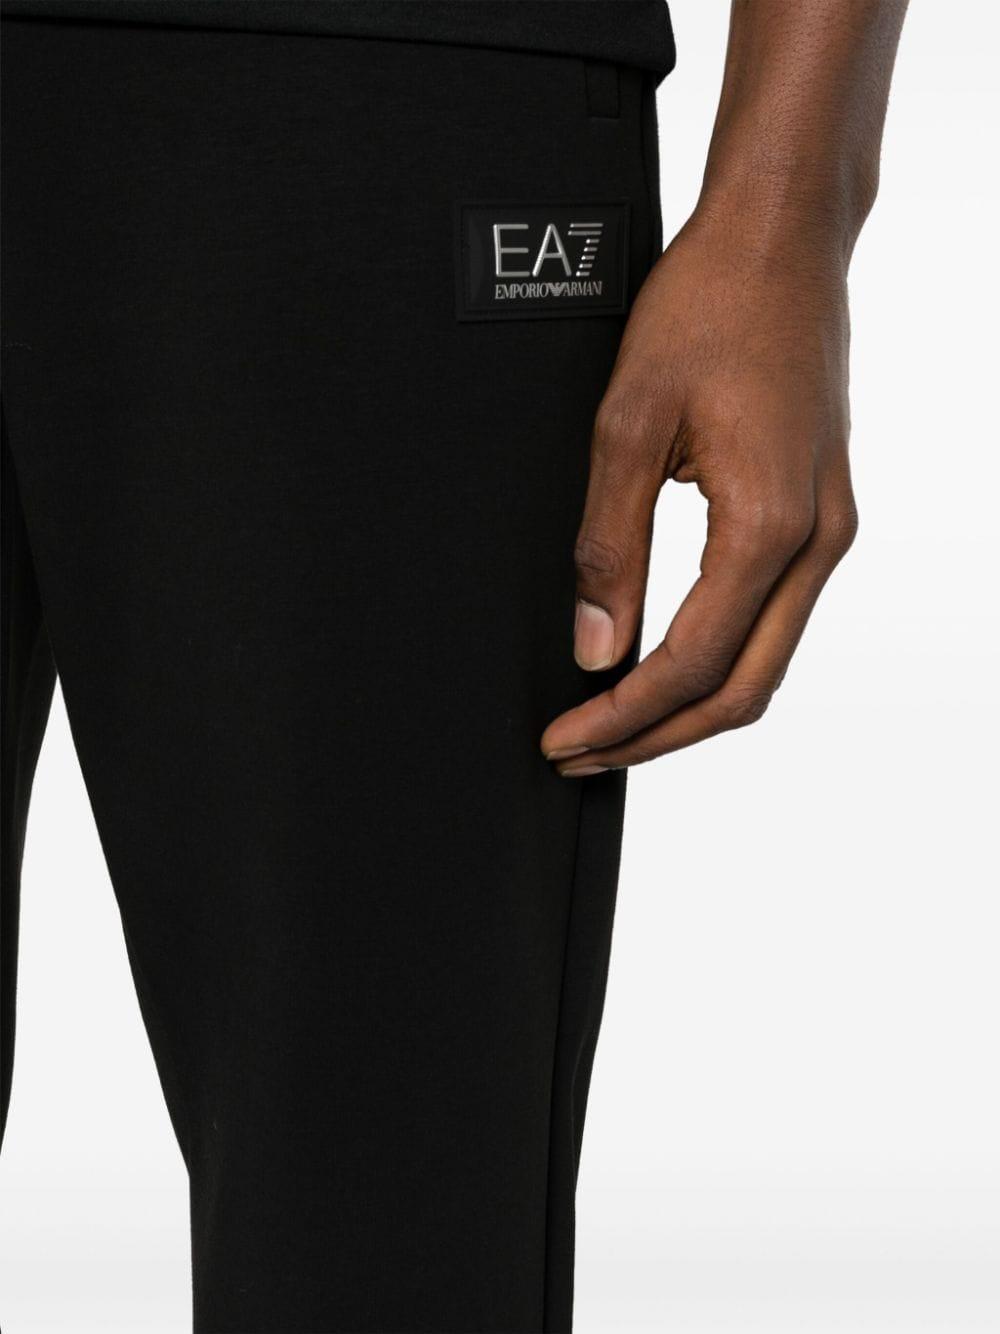 Ea7 Emporio Armani logo-print Cotton Leggings - Farfetch